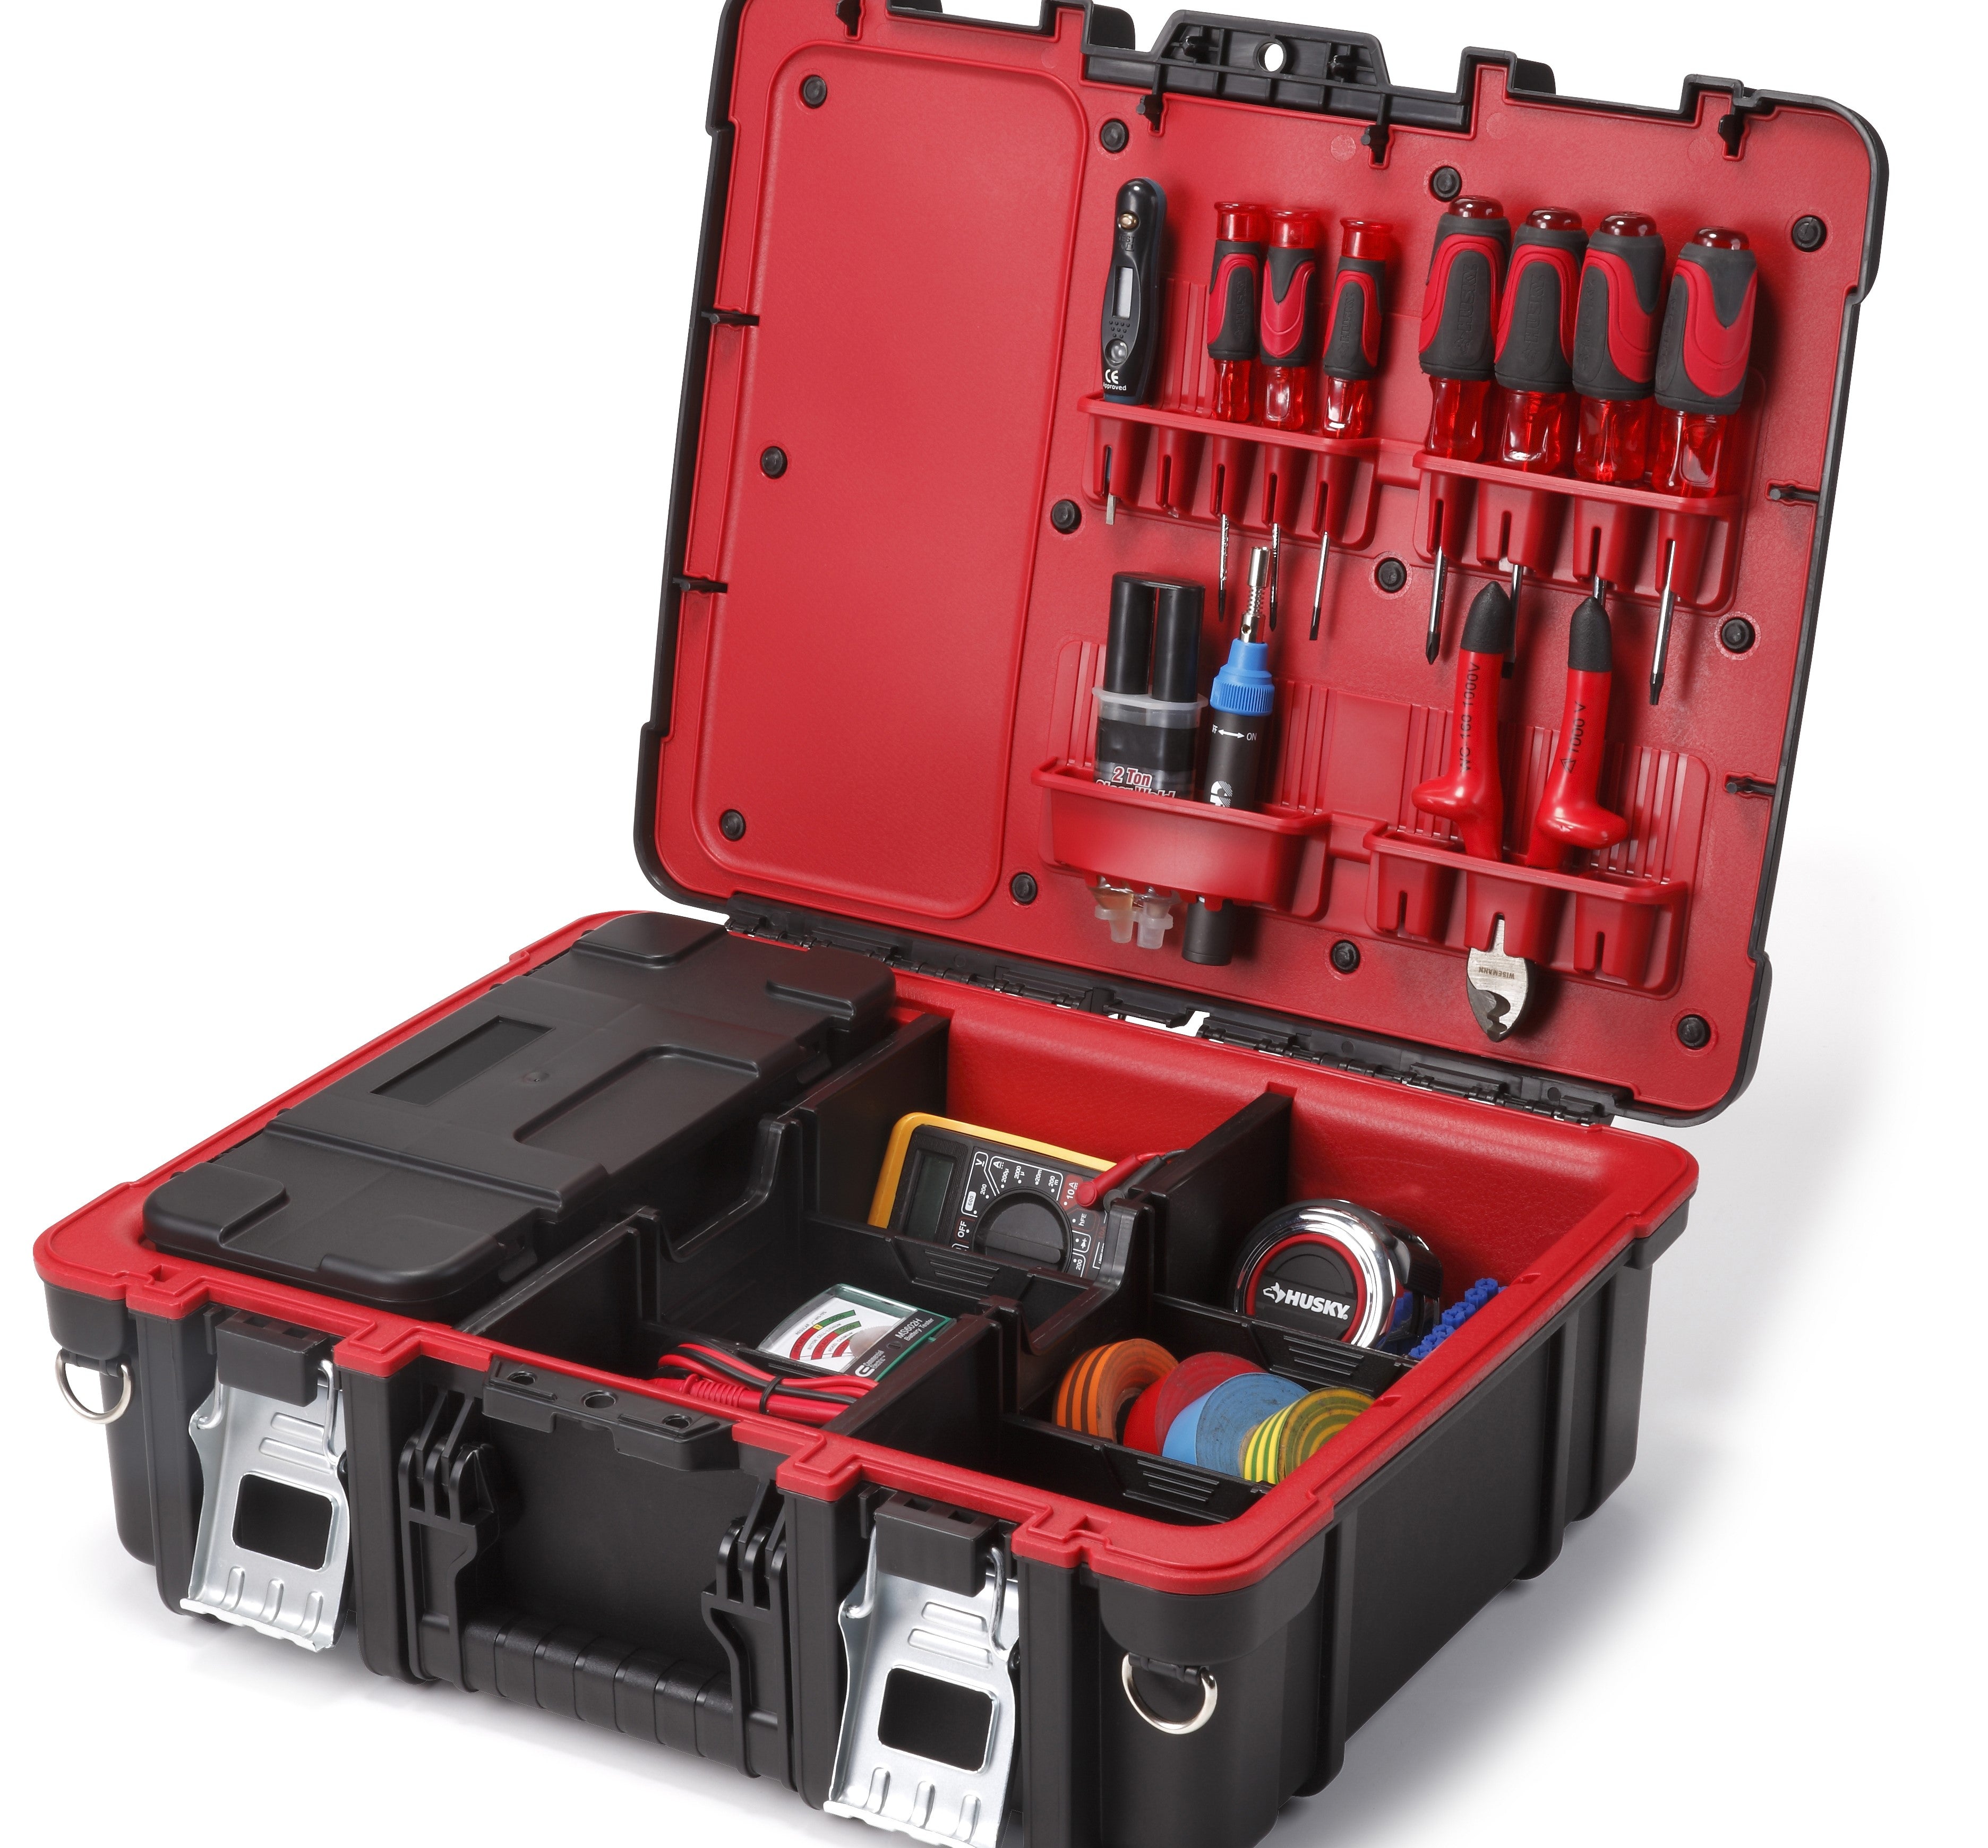 Keter Technician case full of tools open